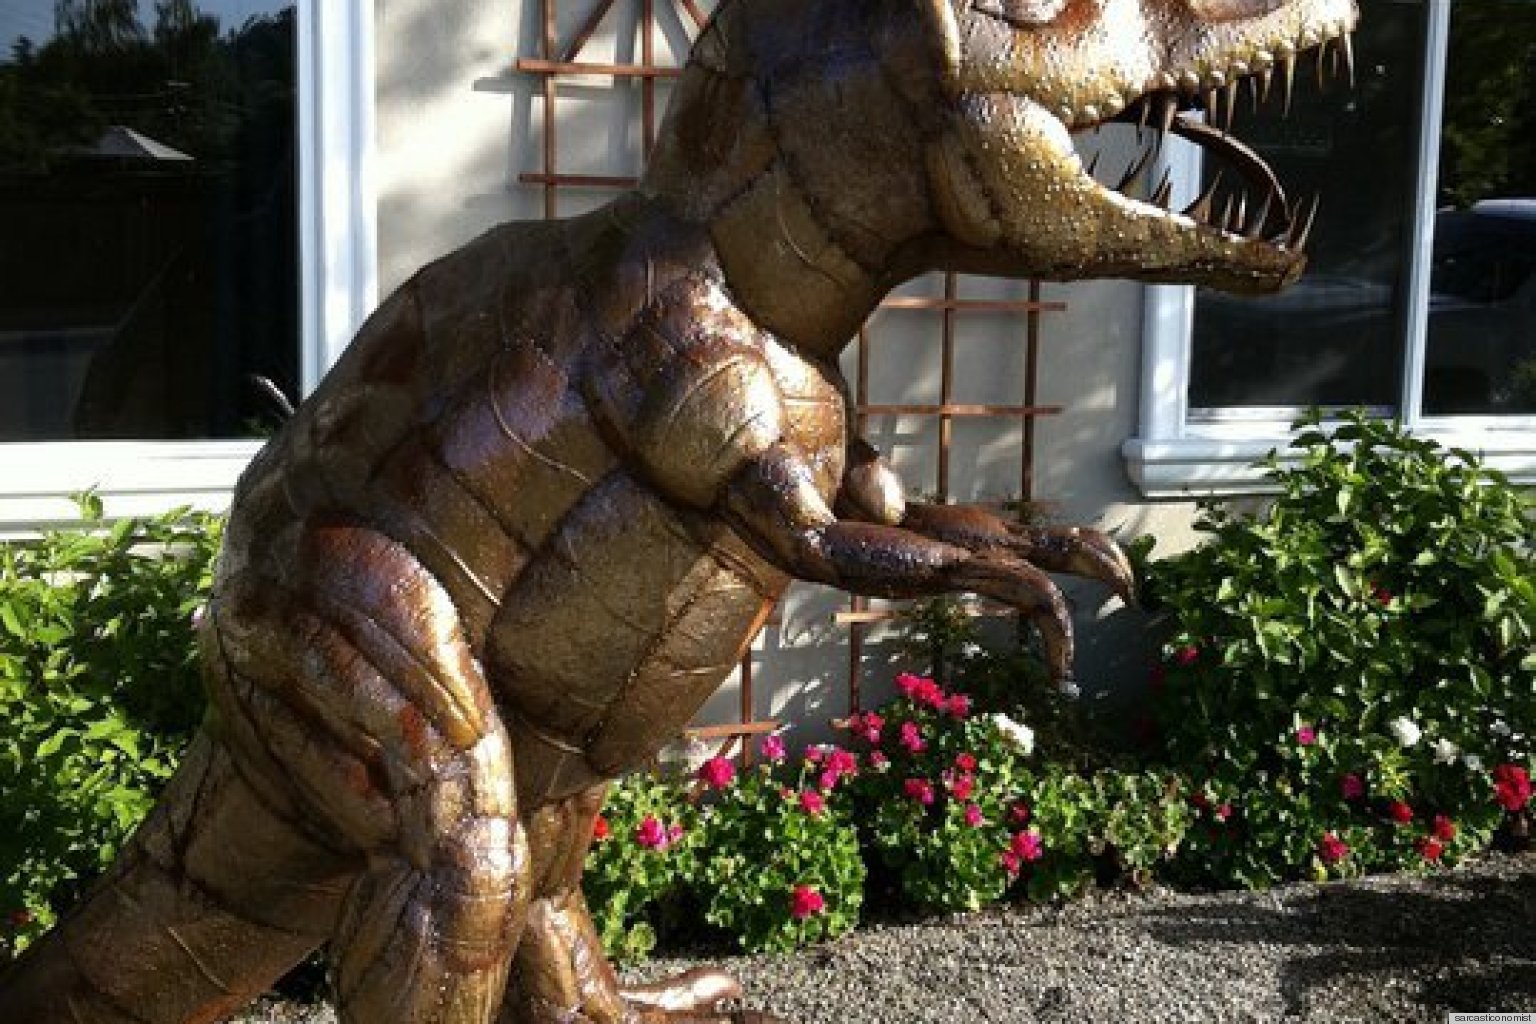 Dug The T-Rex Lawn Dinosaur Brings Joy To A Neighborhood In Redwood